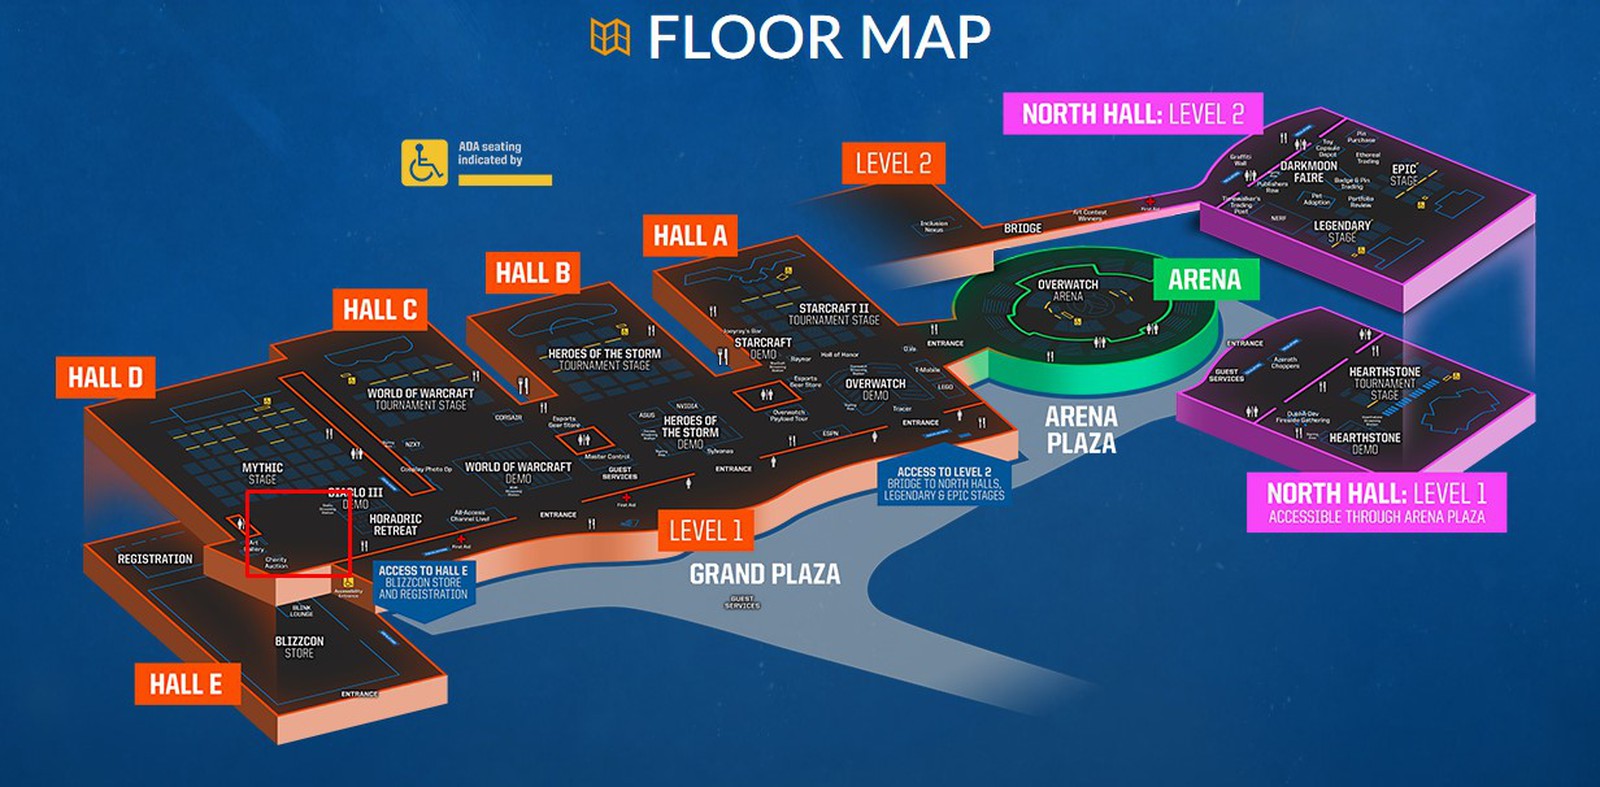 Floor map. BLIZZCON зал. Близкон карта. Виртуальный билет на BLIZZCON 2019. A Mythic Future карта.